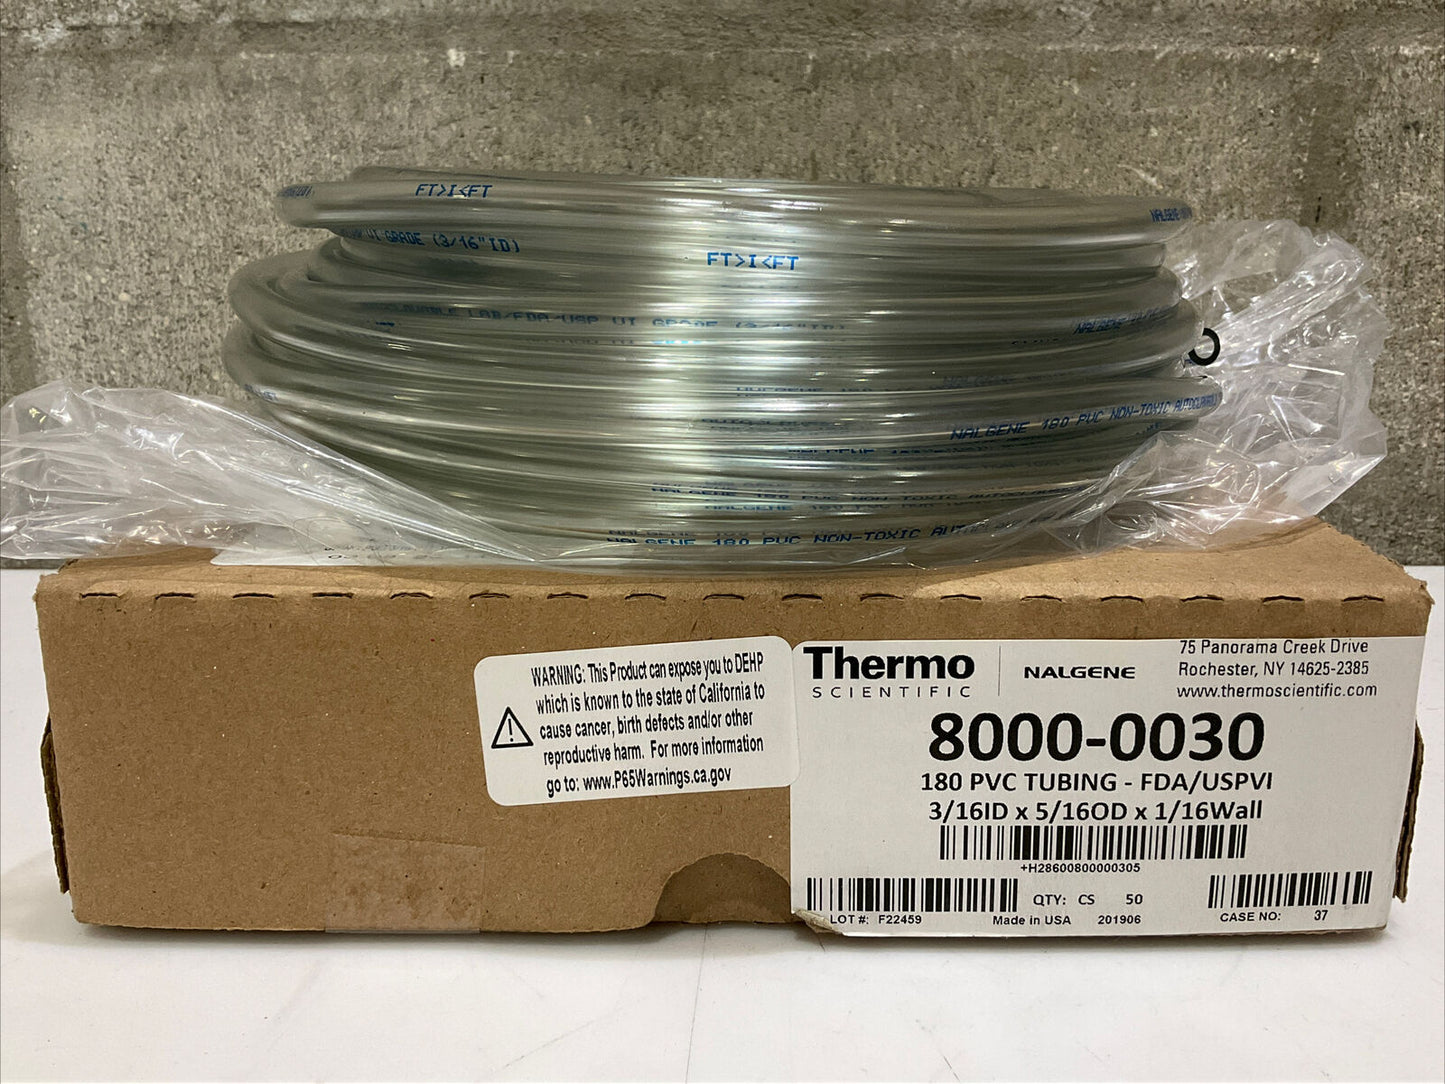 Nalgene Clear Plastic Tubing 180 PVC